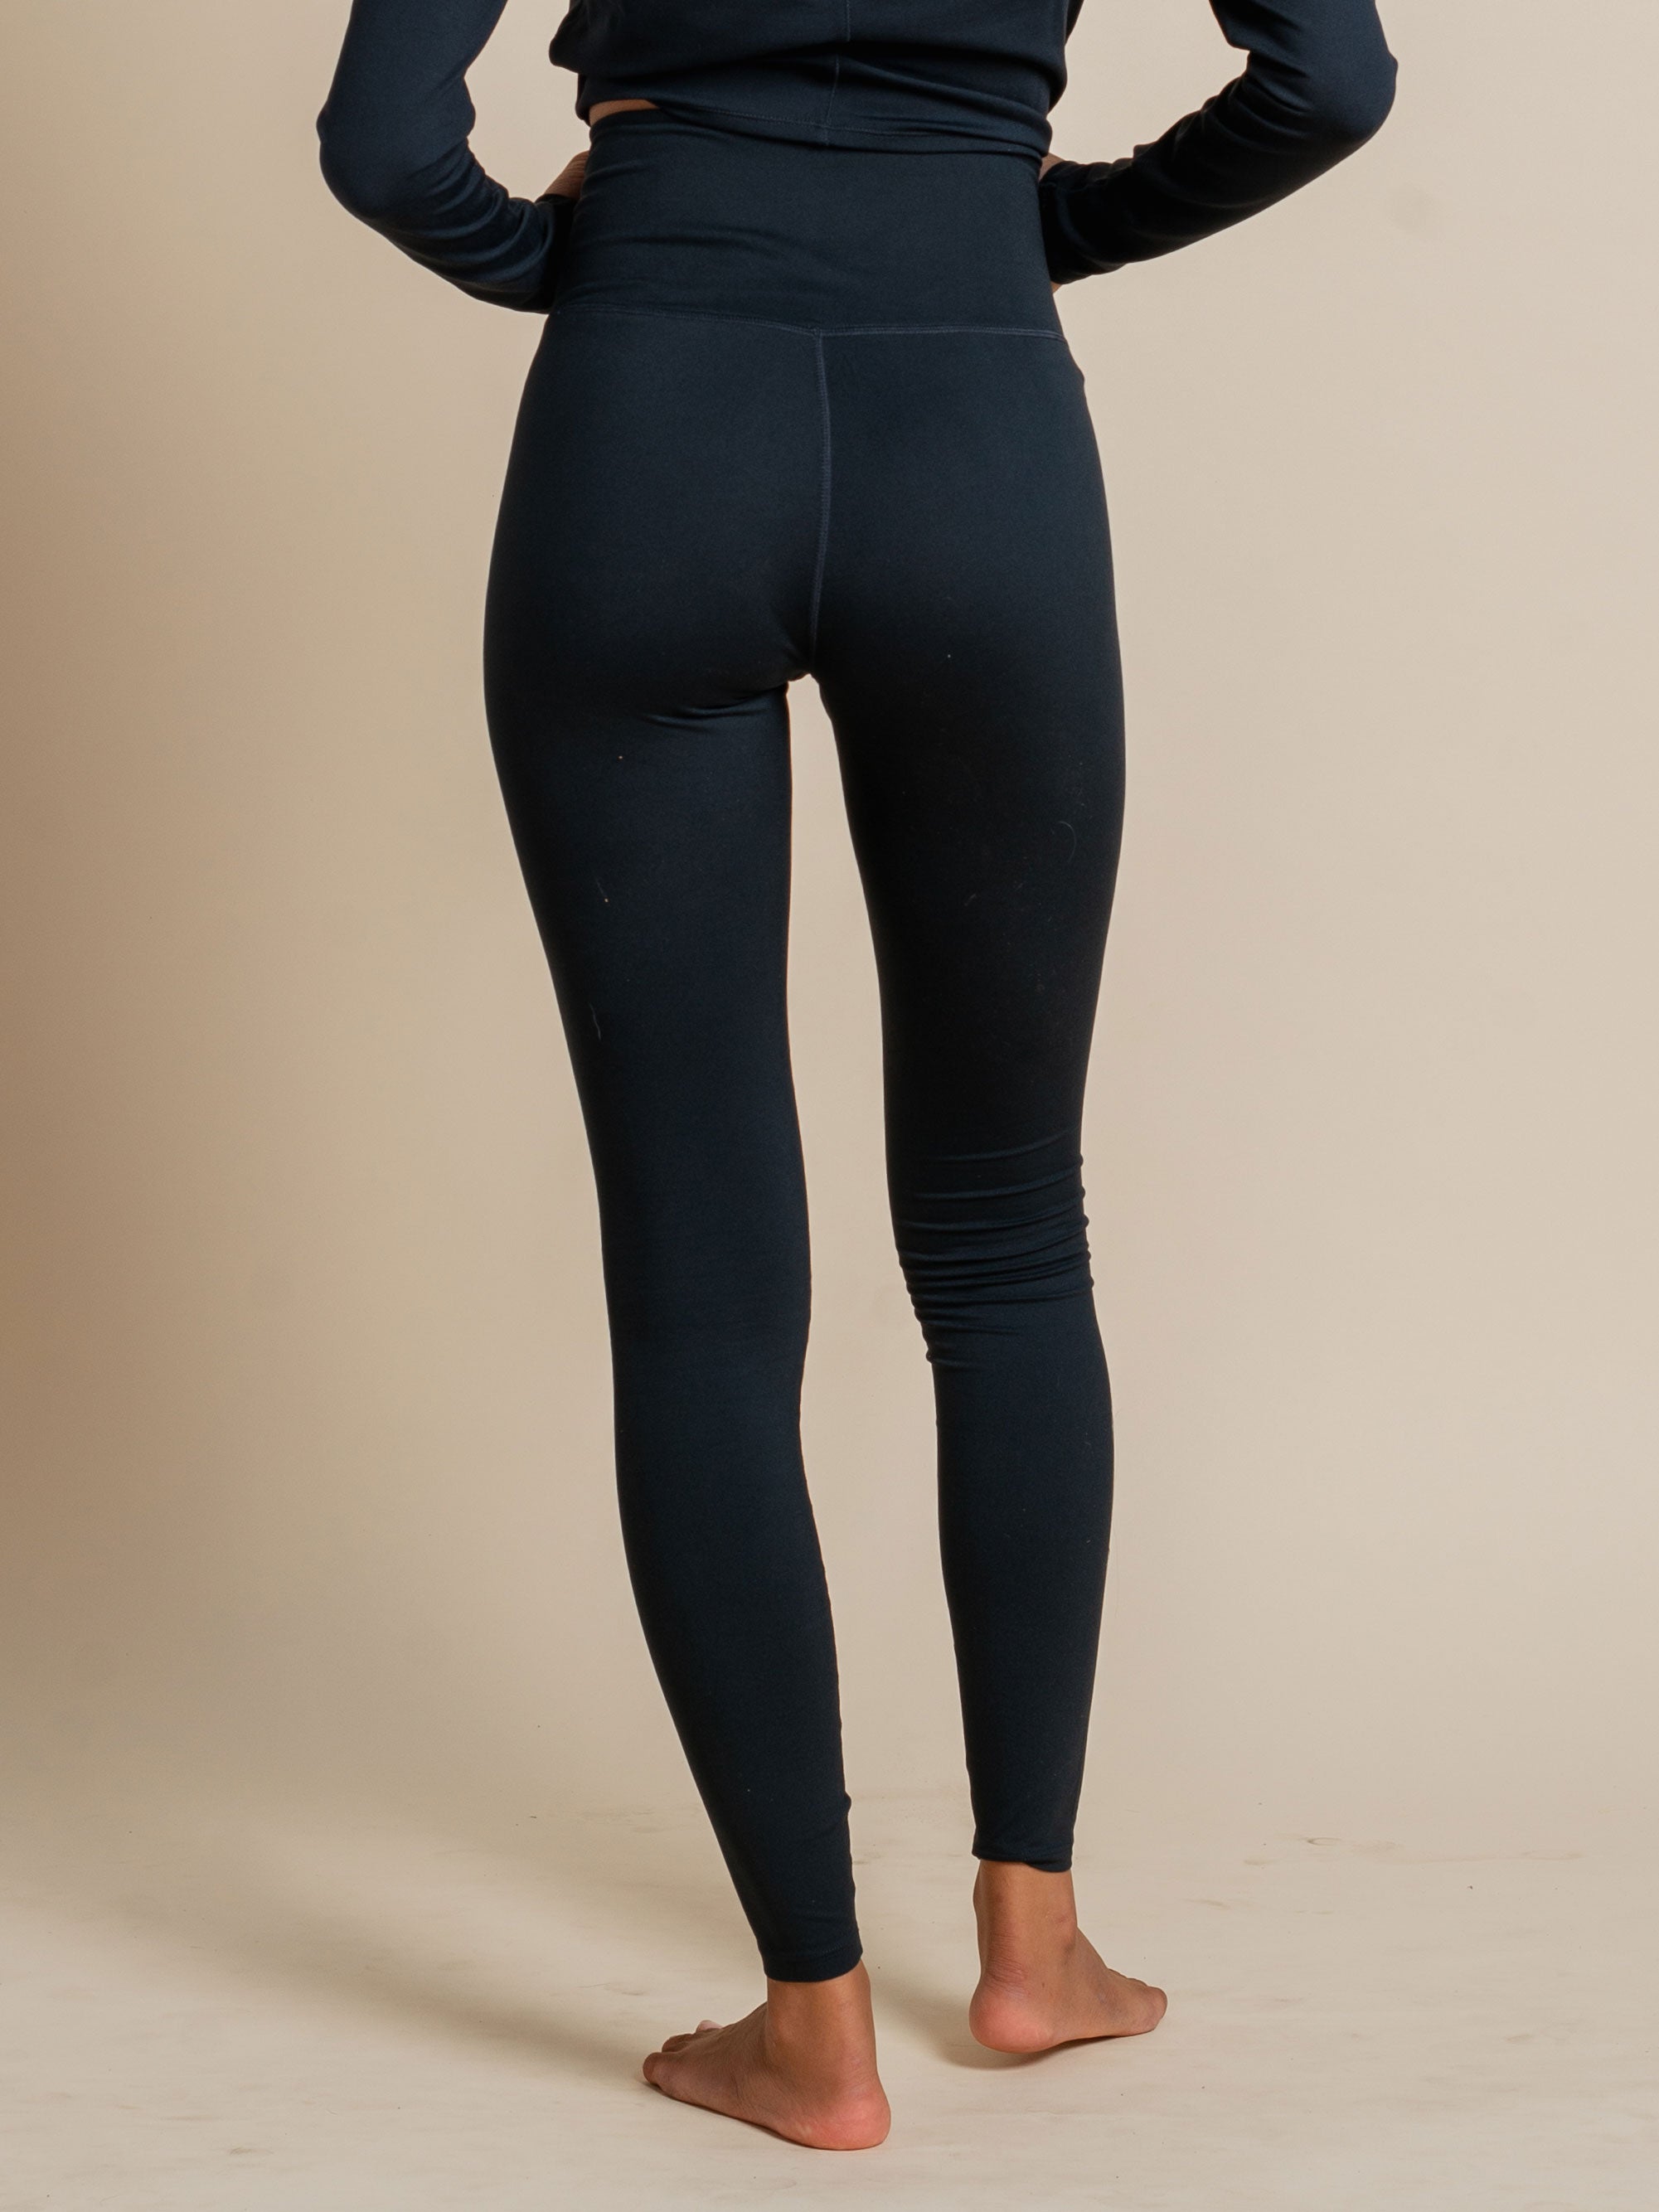 PrAna Clothing Outlet - PrAna Yoga Pants Sale | prAna USA